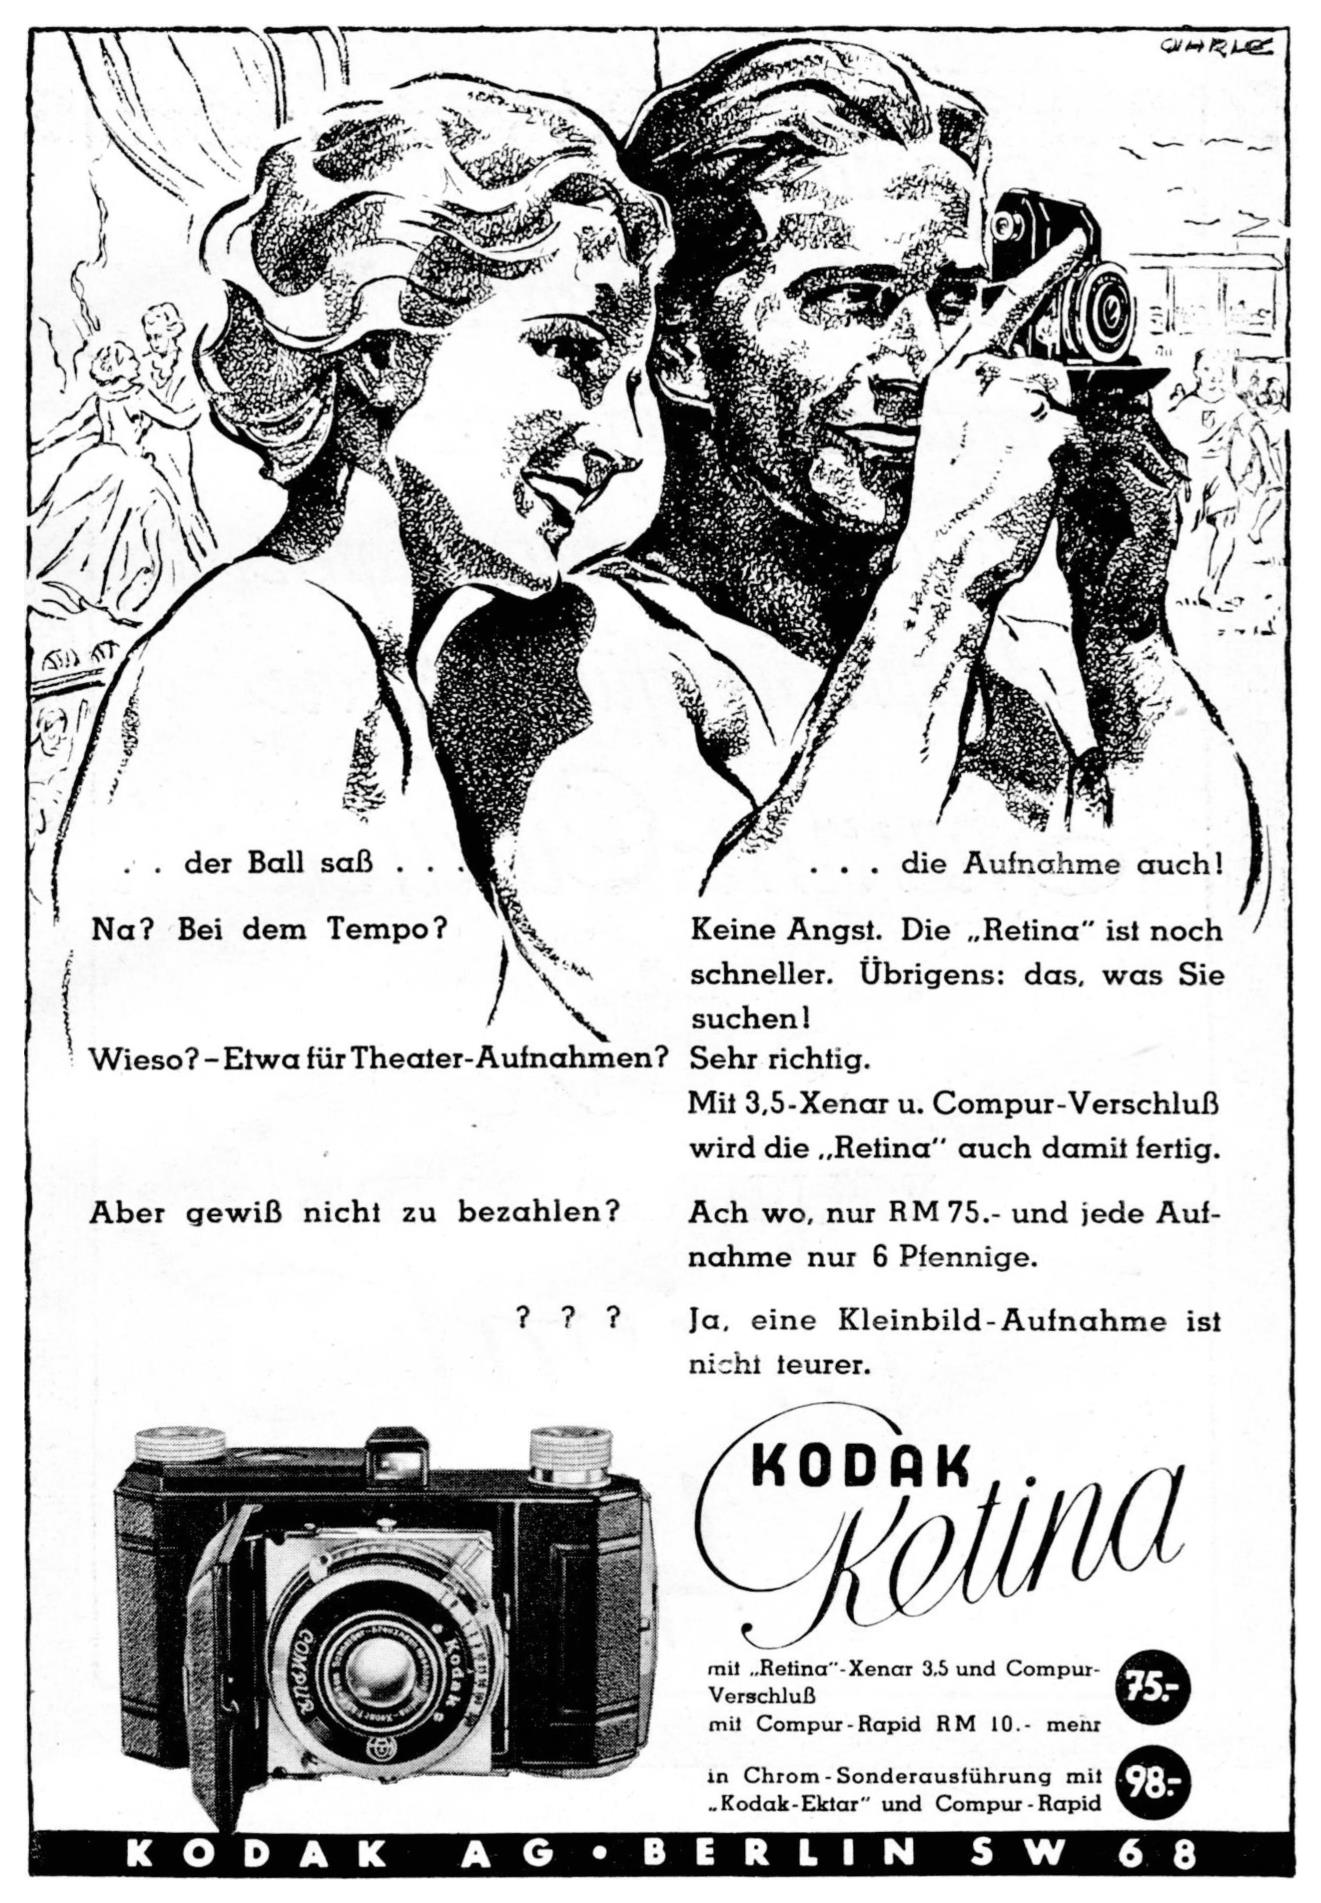 Kodak 1936 0.jpg